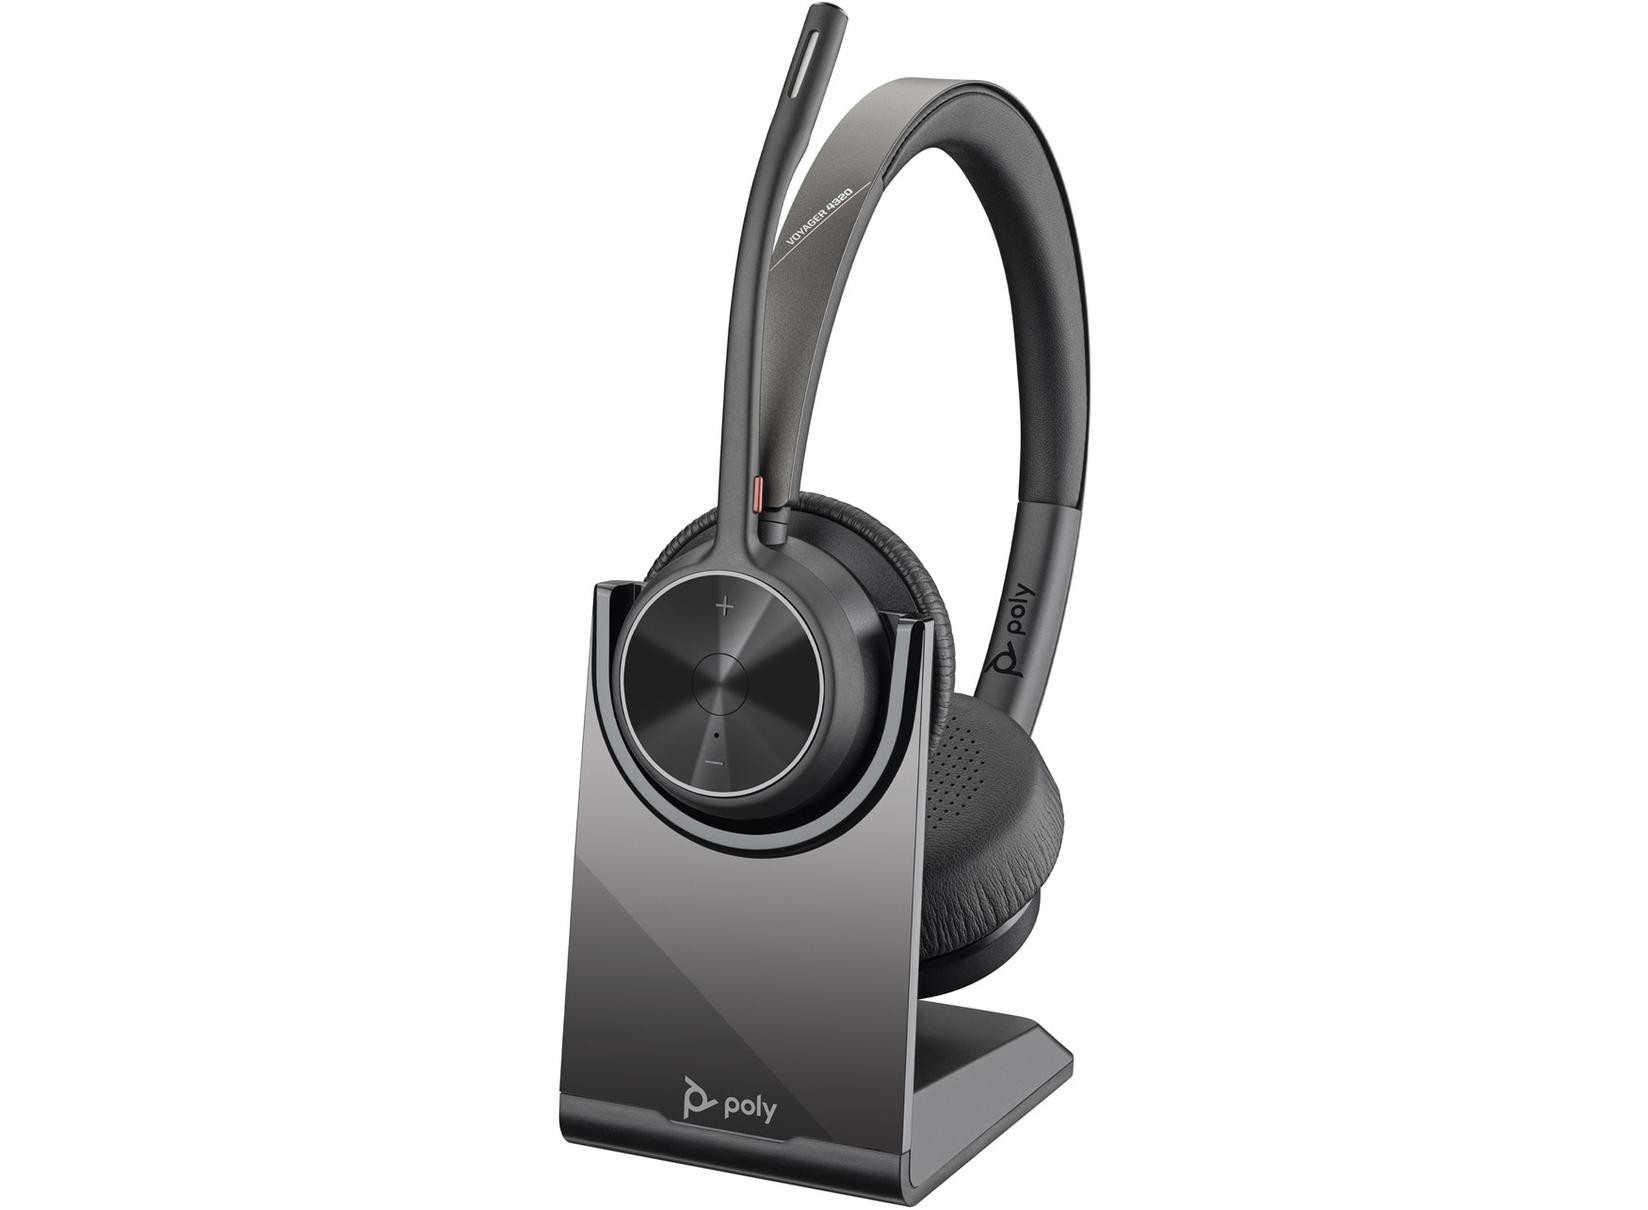 Poly Voyager 4320 Bežične slušalice sa mikrofonom i postoljem za punjenje, Na uho, USB-C, +BT700 dongle, Crne